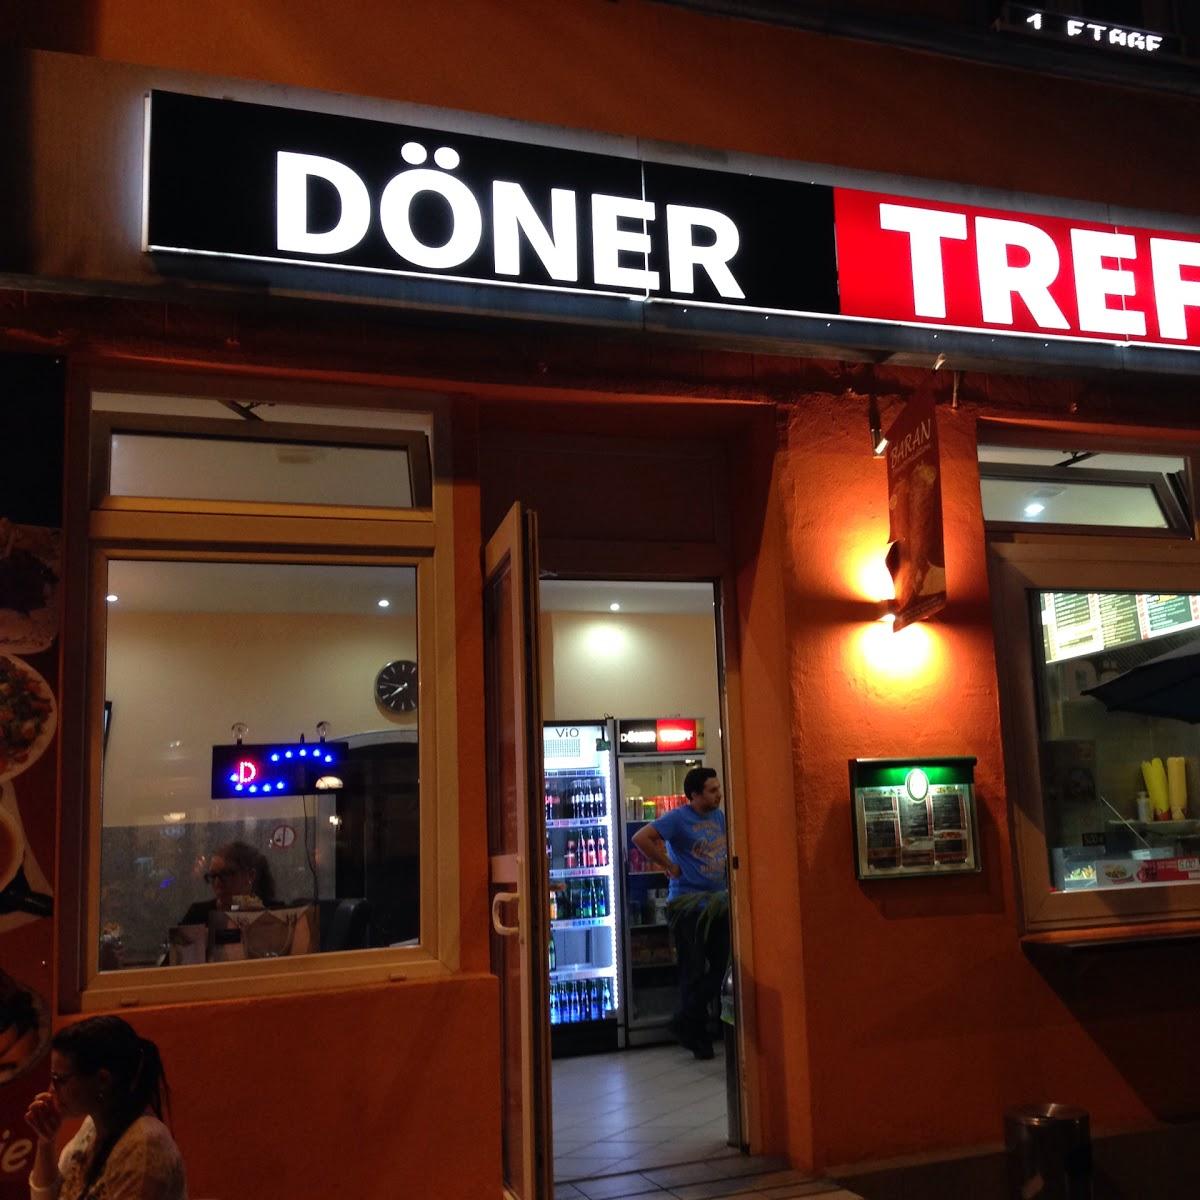 Restaurant "Döner Treff 24" in Gießen